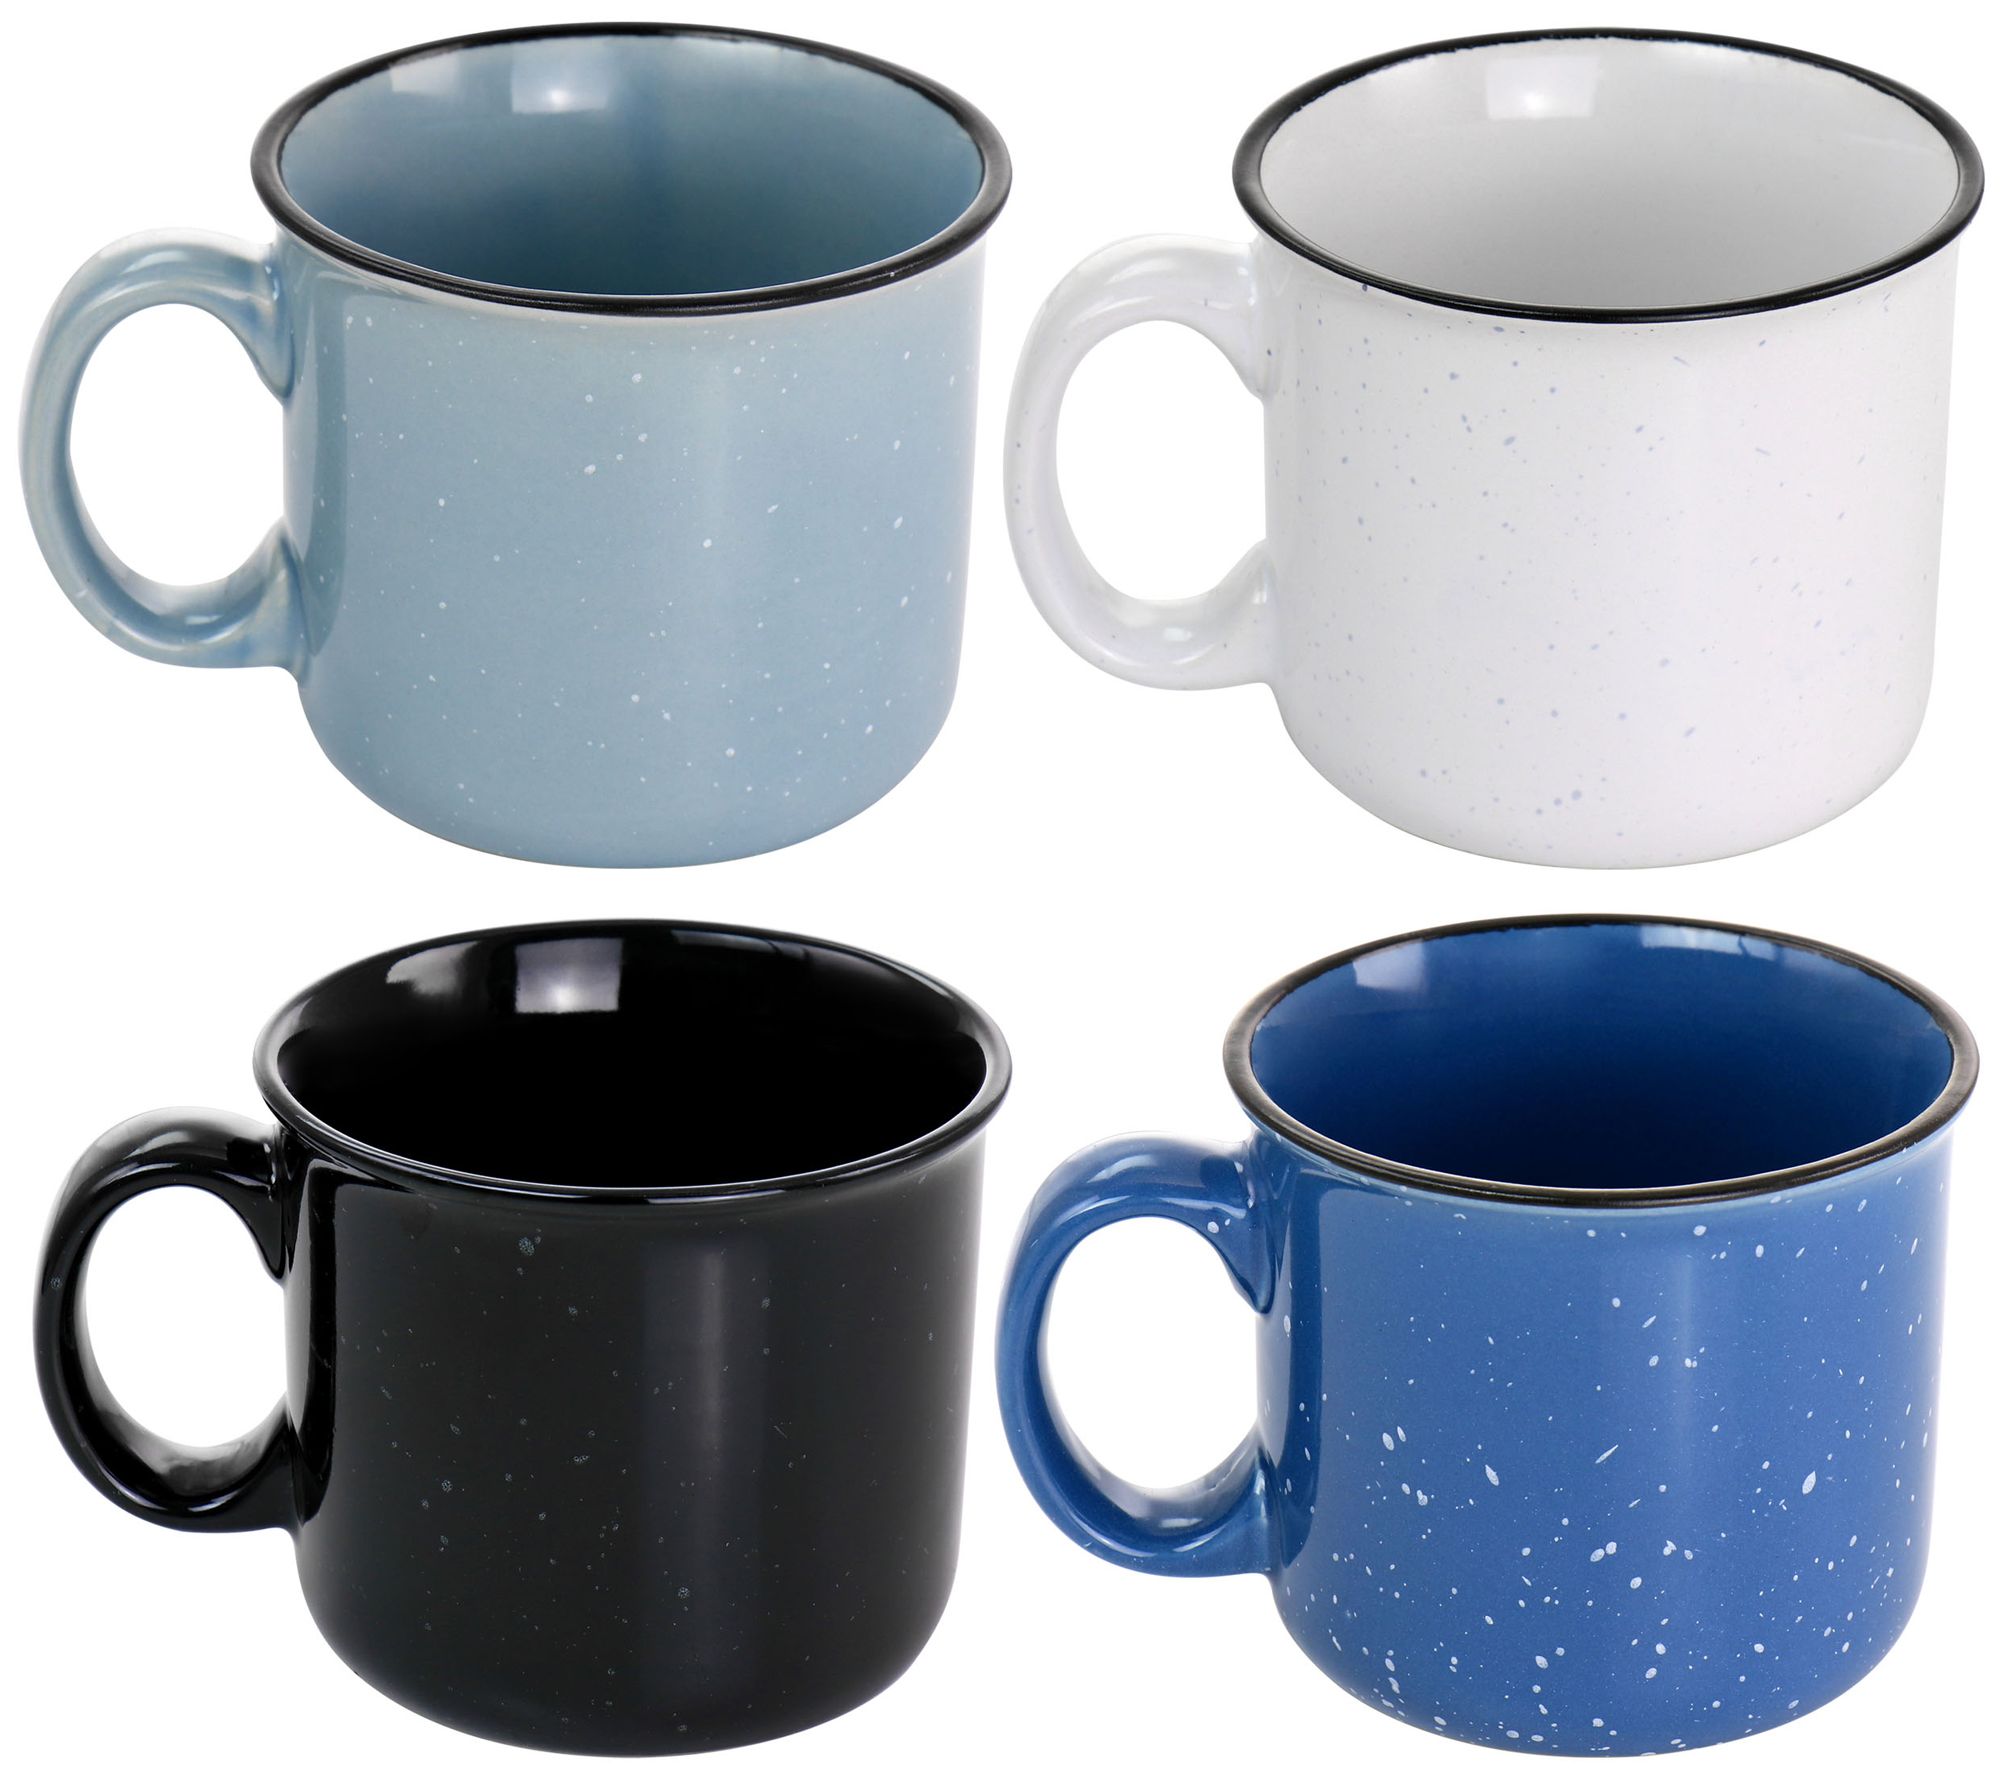 Mr. Coffee Travertine 16 oz. Blue Stoneware Stainless Steel Travel Mug with Lid